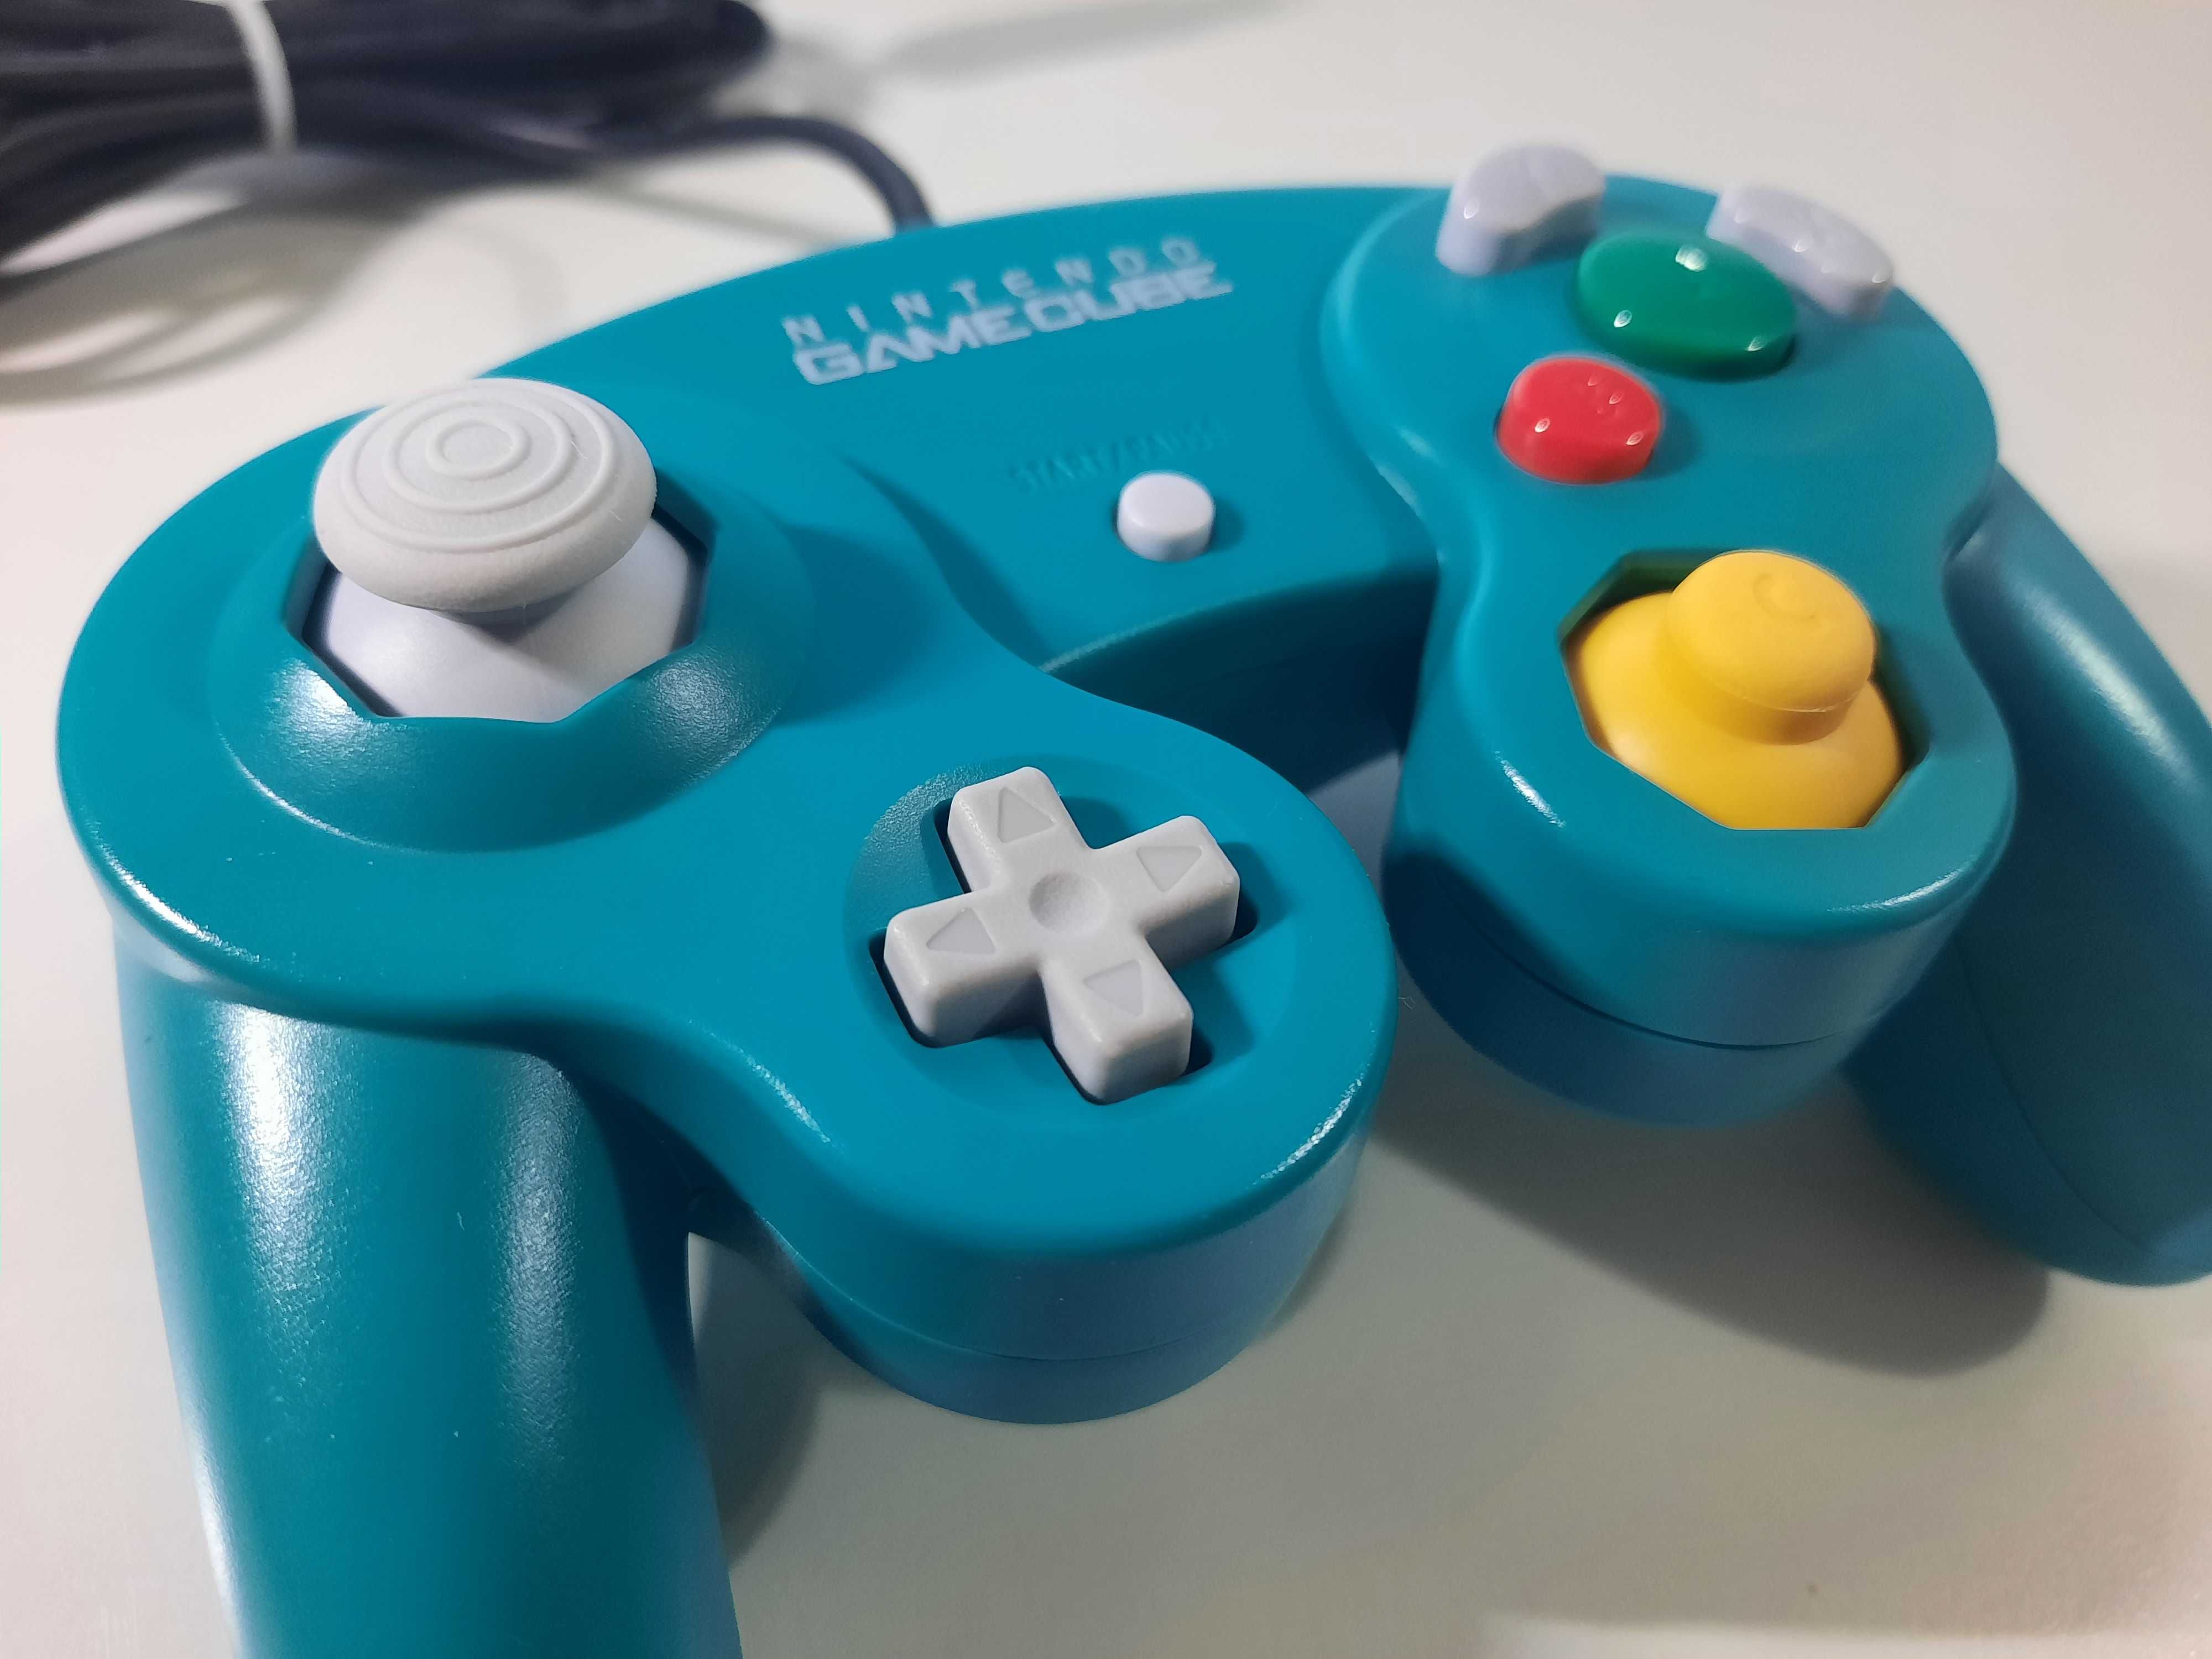 Pad Nintendo GameCube - Emerald Blue (DOL-003) OEM